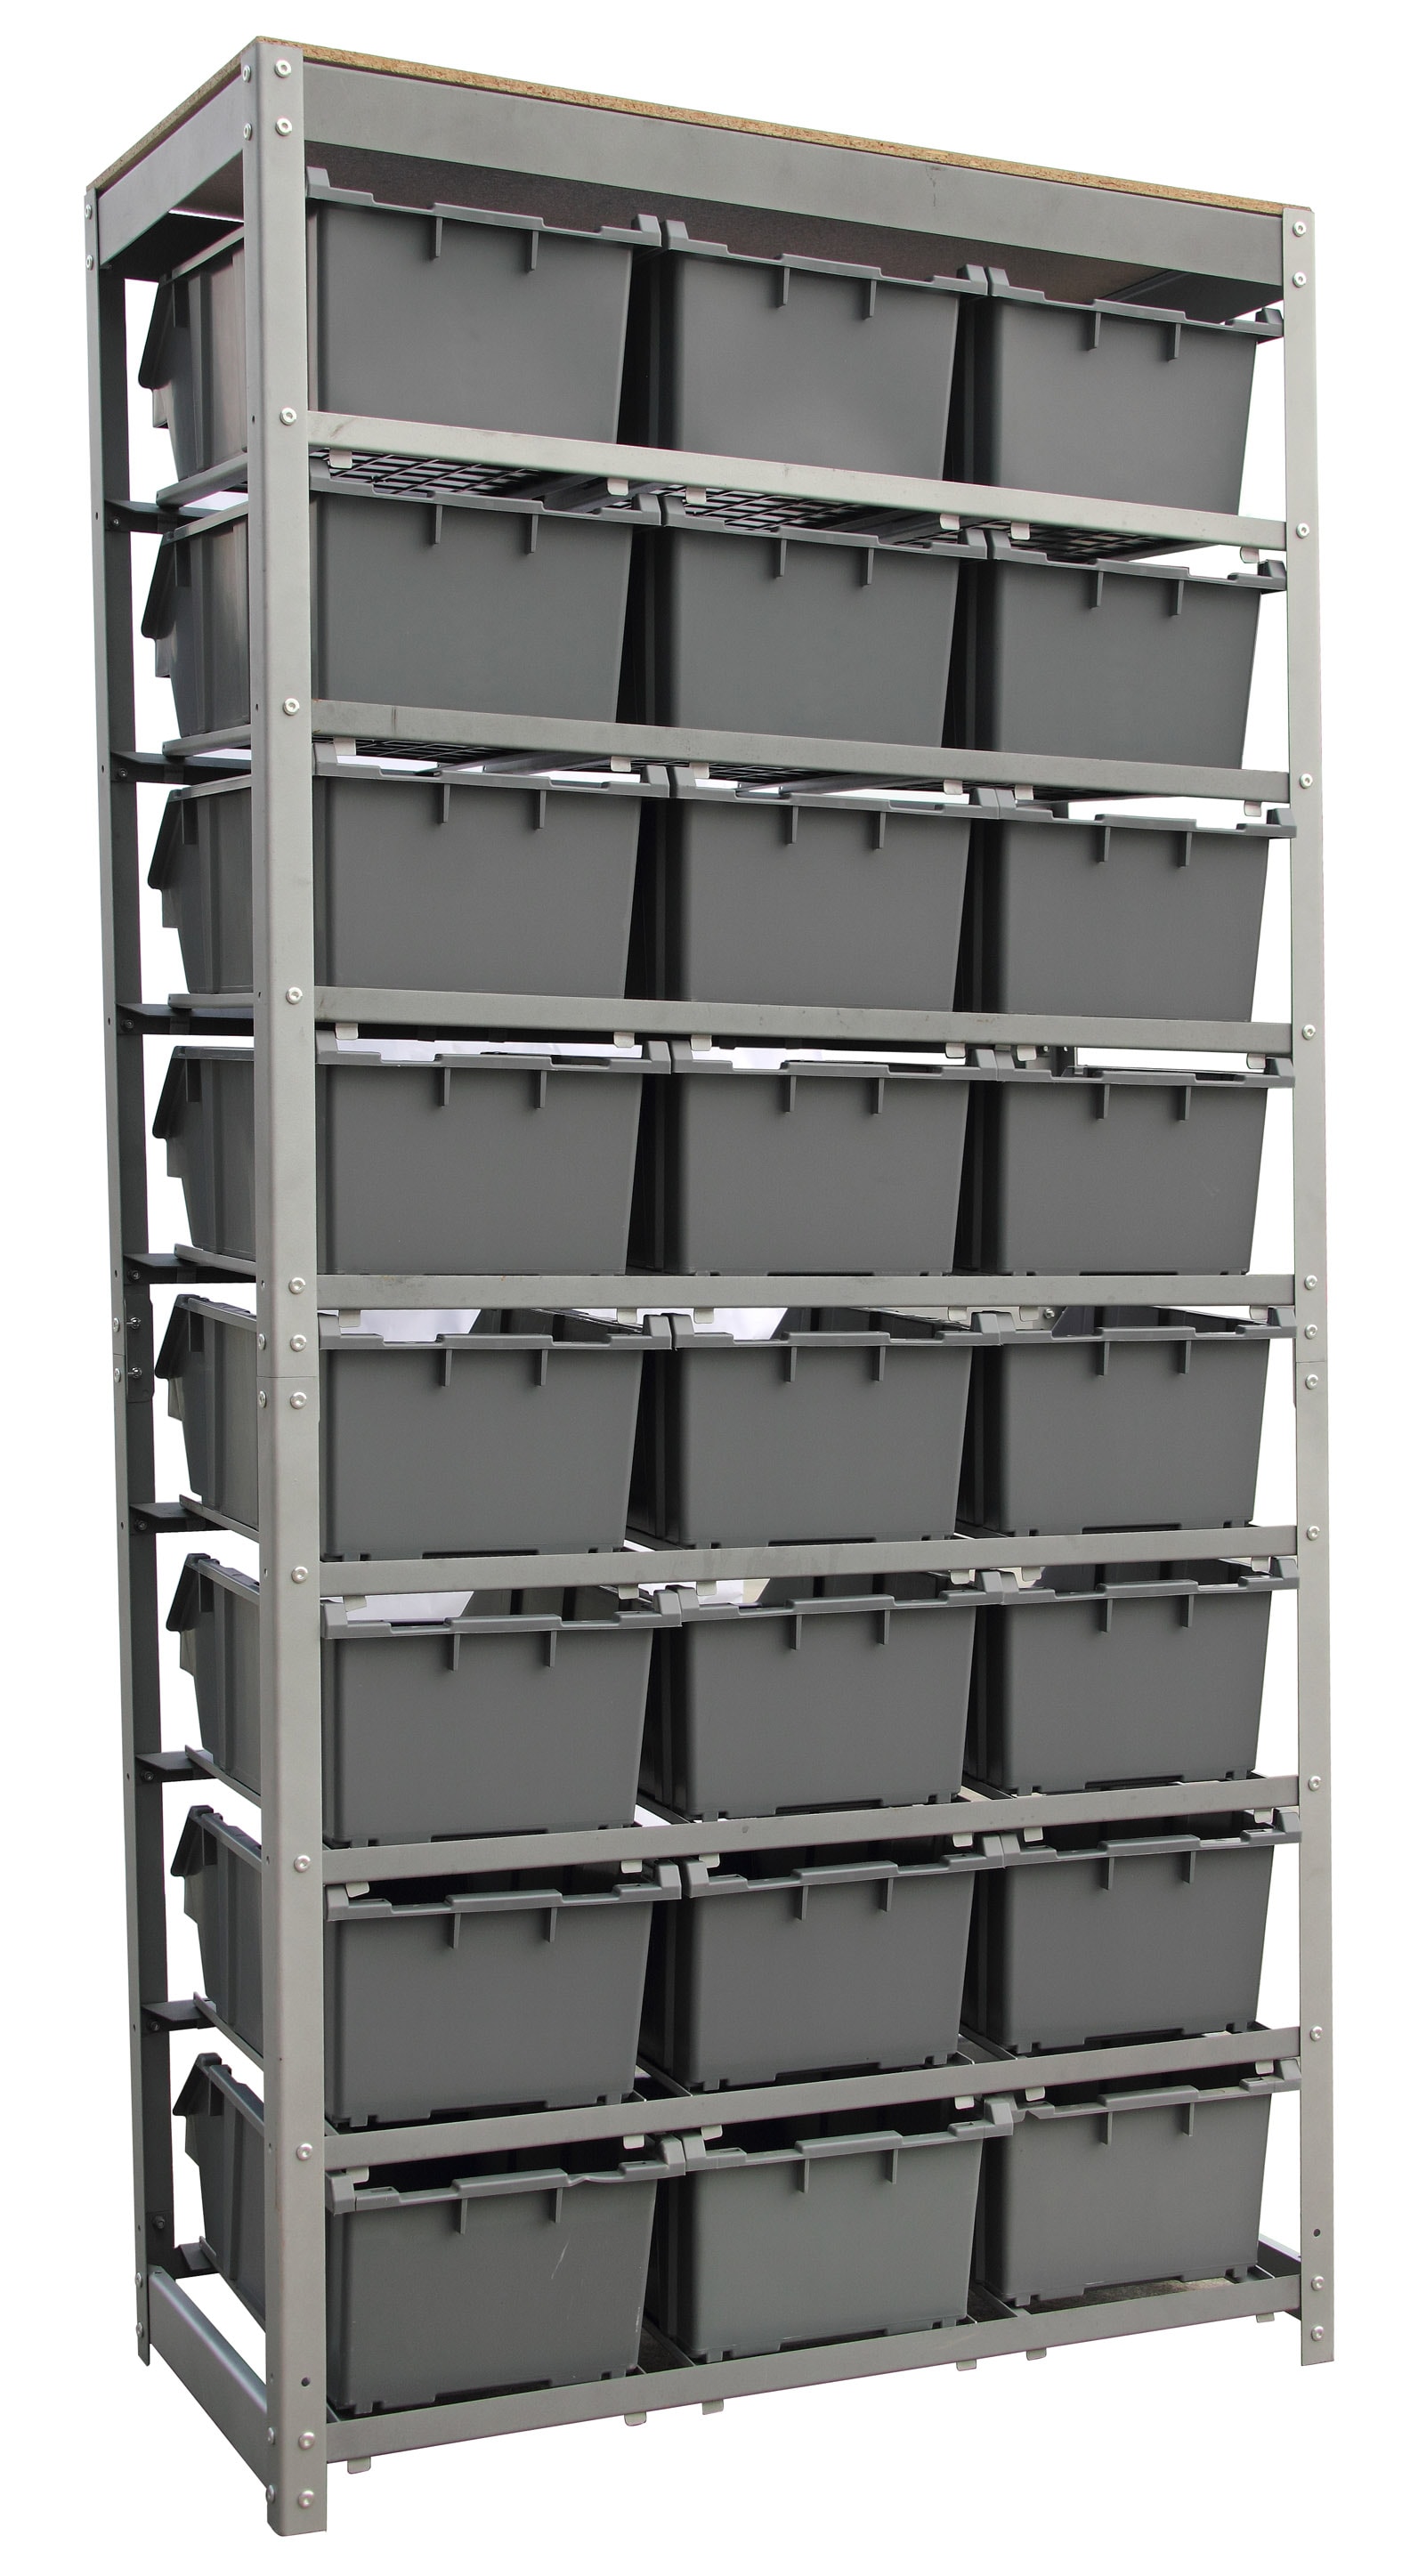 KING'S RACK Bin Storage System Organizer w/ 15 Plastic Bins in 3 tiers –  King's Rack